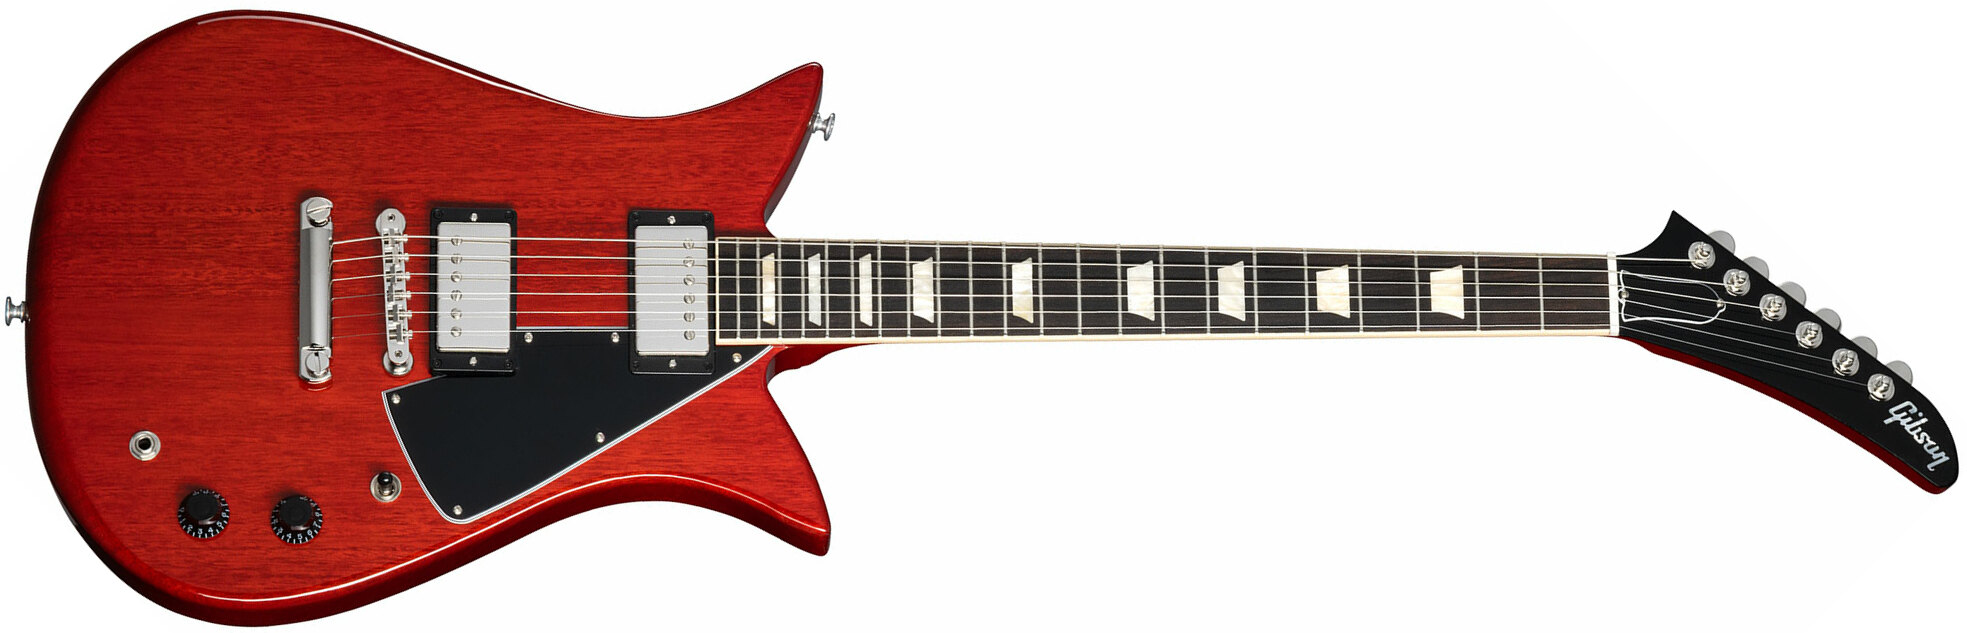 Gibson Theodore Standard Original 2h Ht Rw - Vintage Cherry - Retro rock electric guitar - Main picture